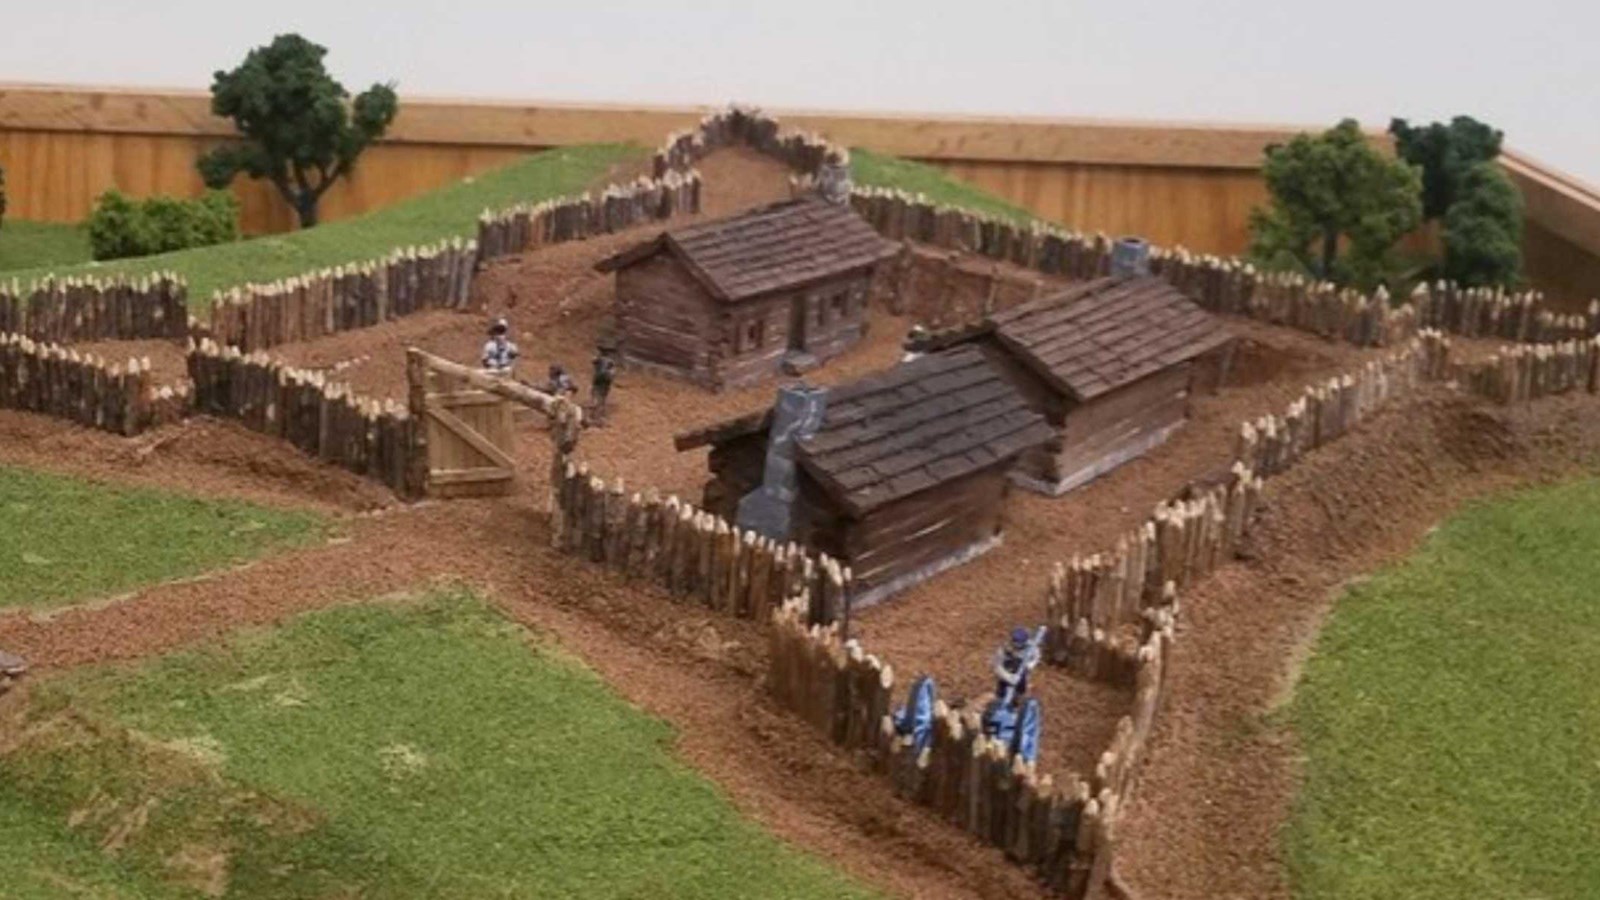  A model of the Fort de Cavagnial represents a small, square, wooden-post fort, 